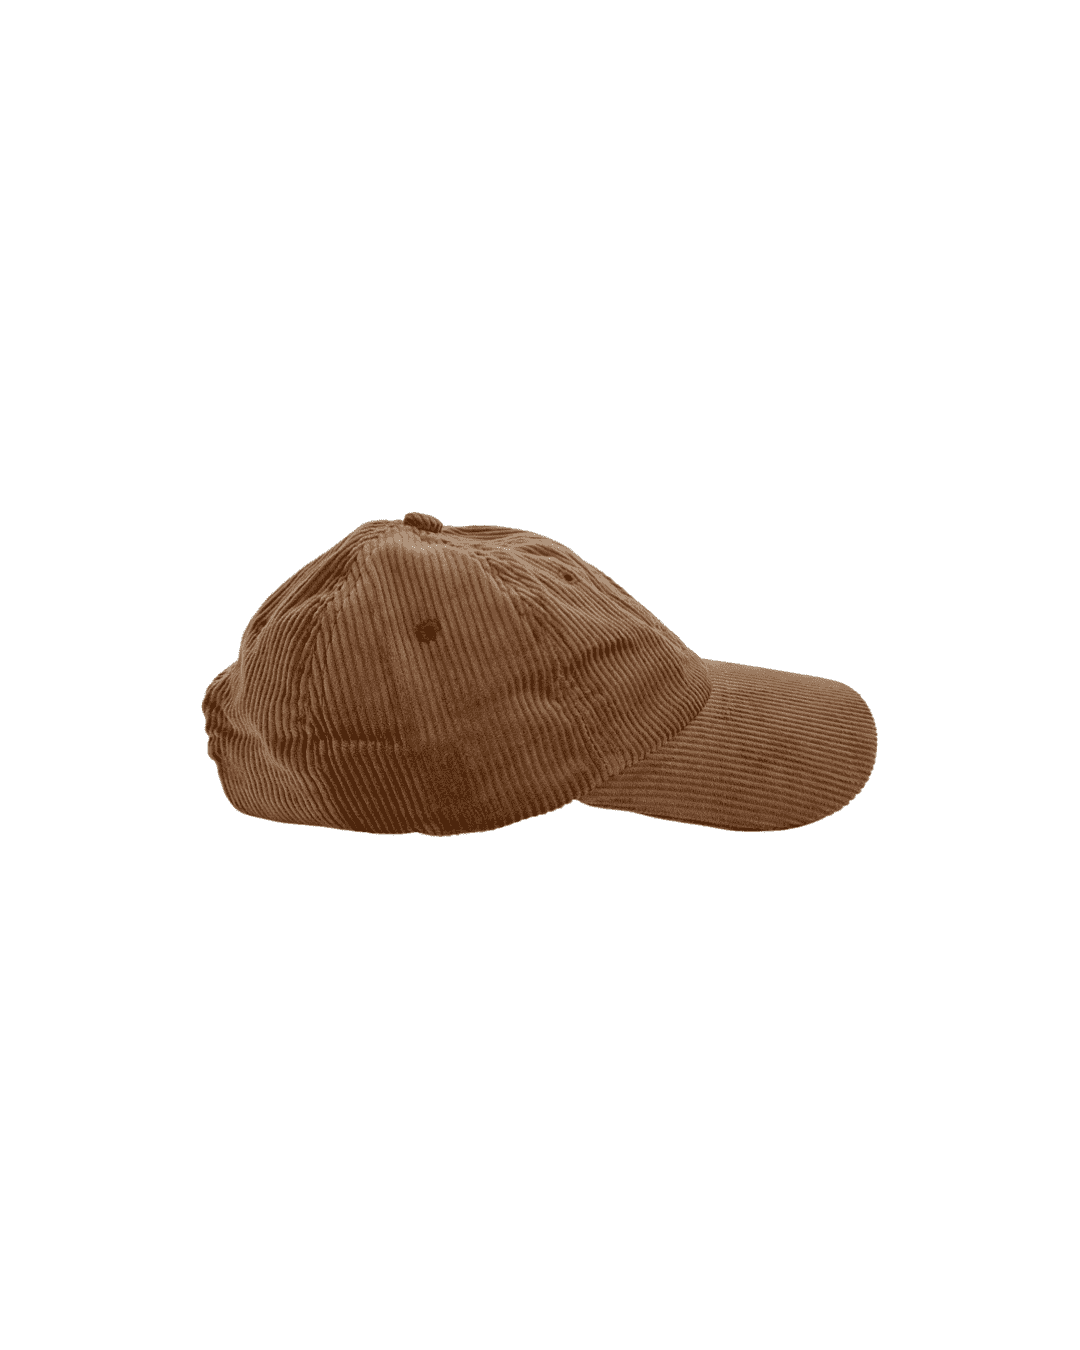 The Castaño Corduroy Hat